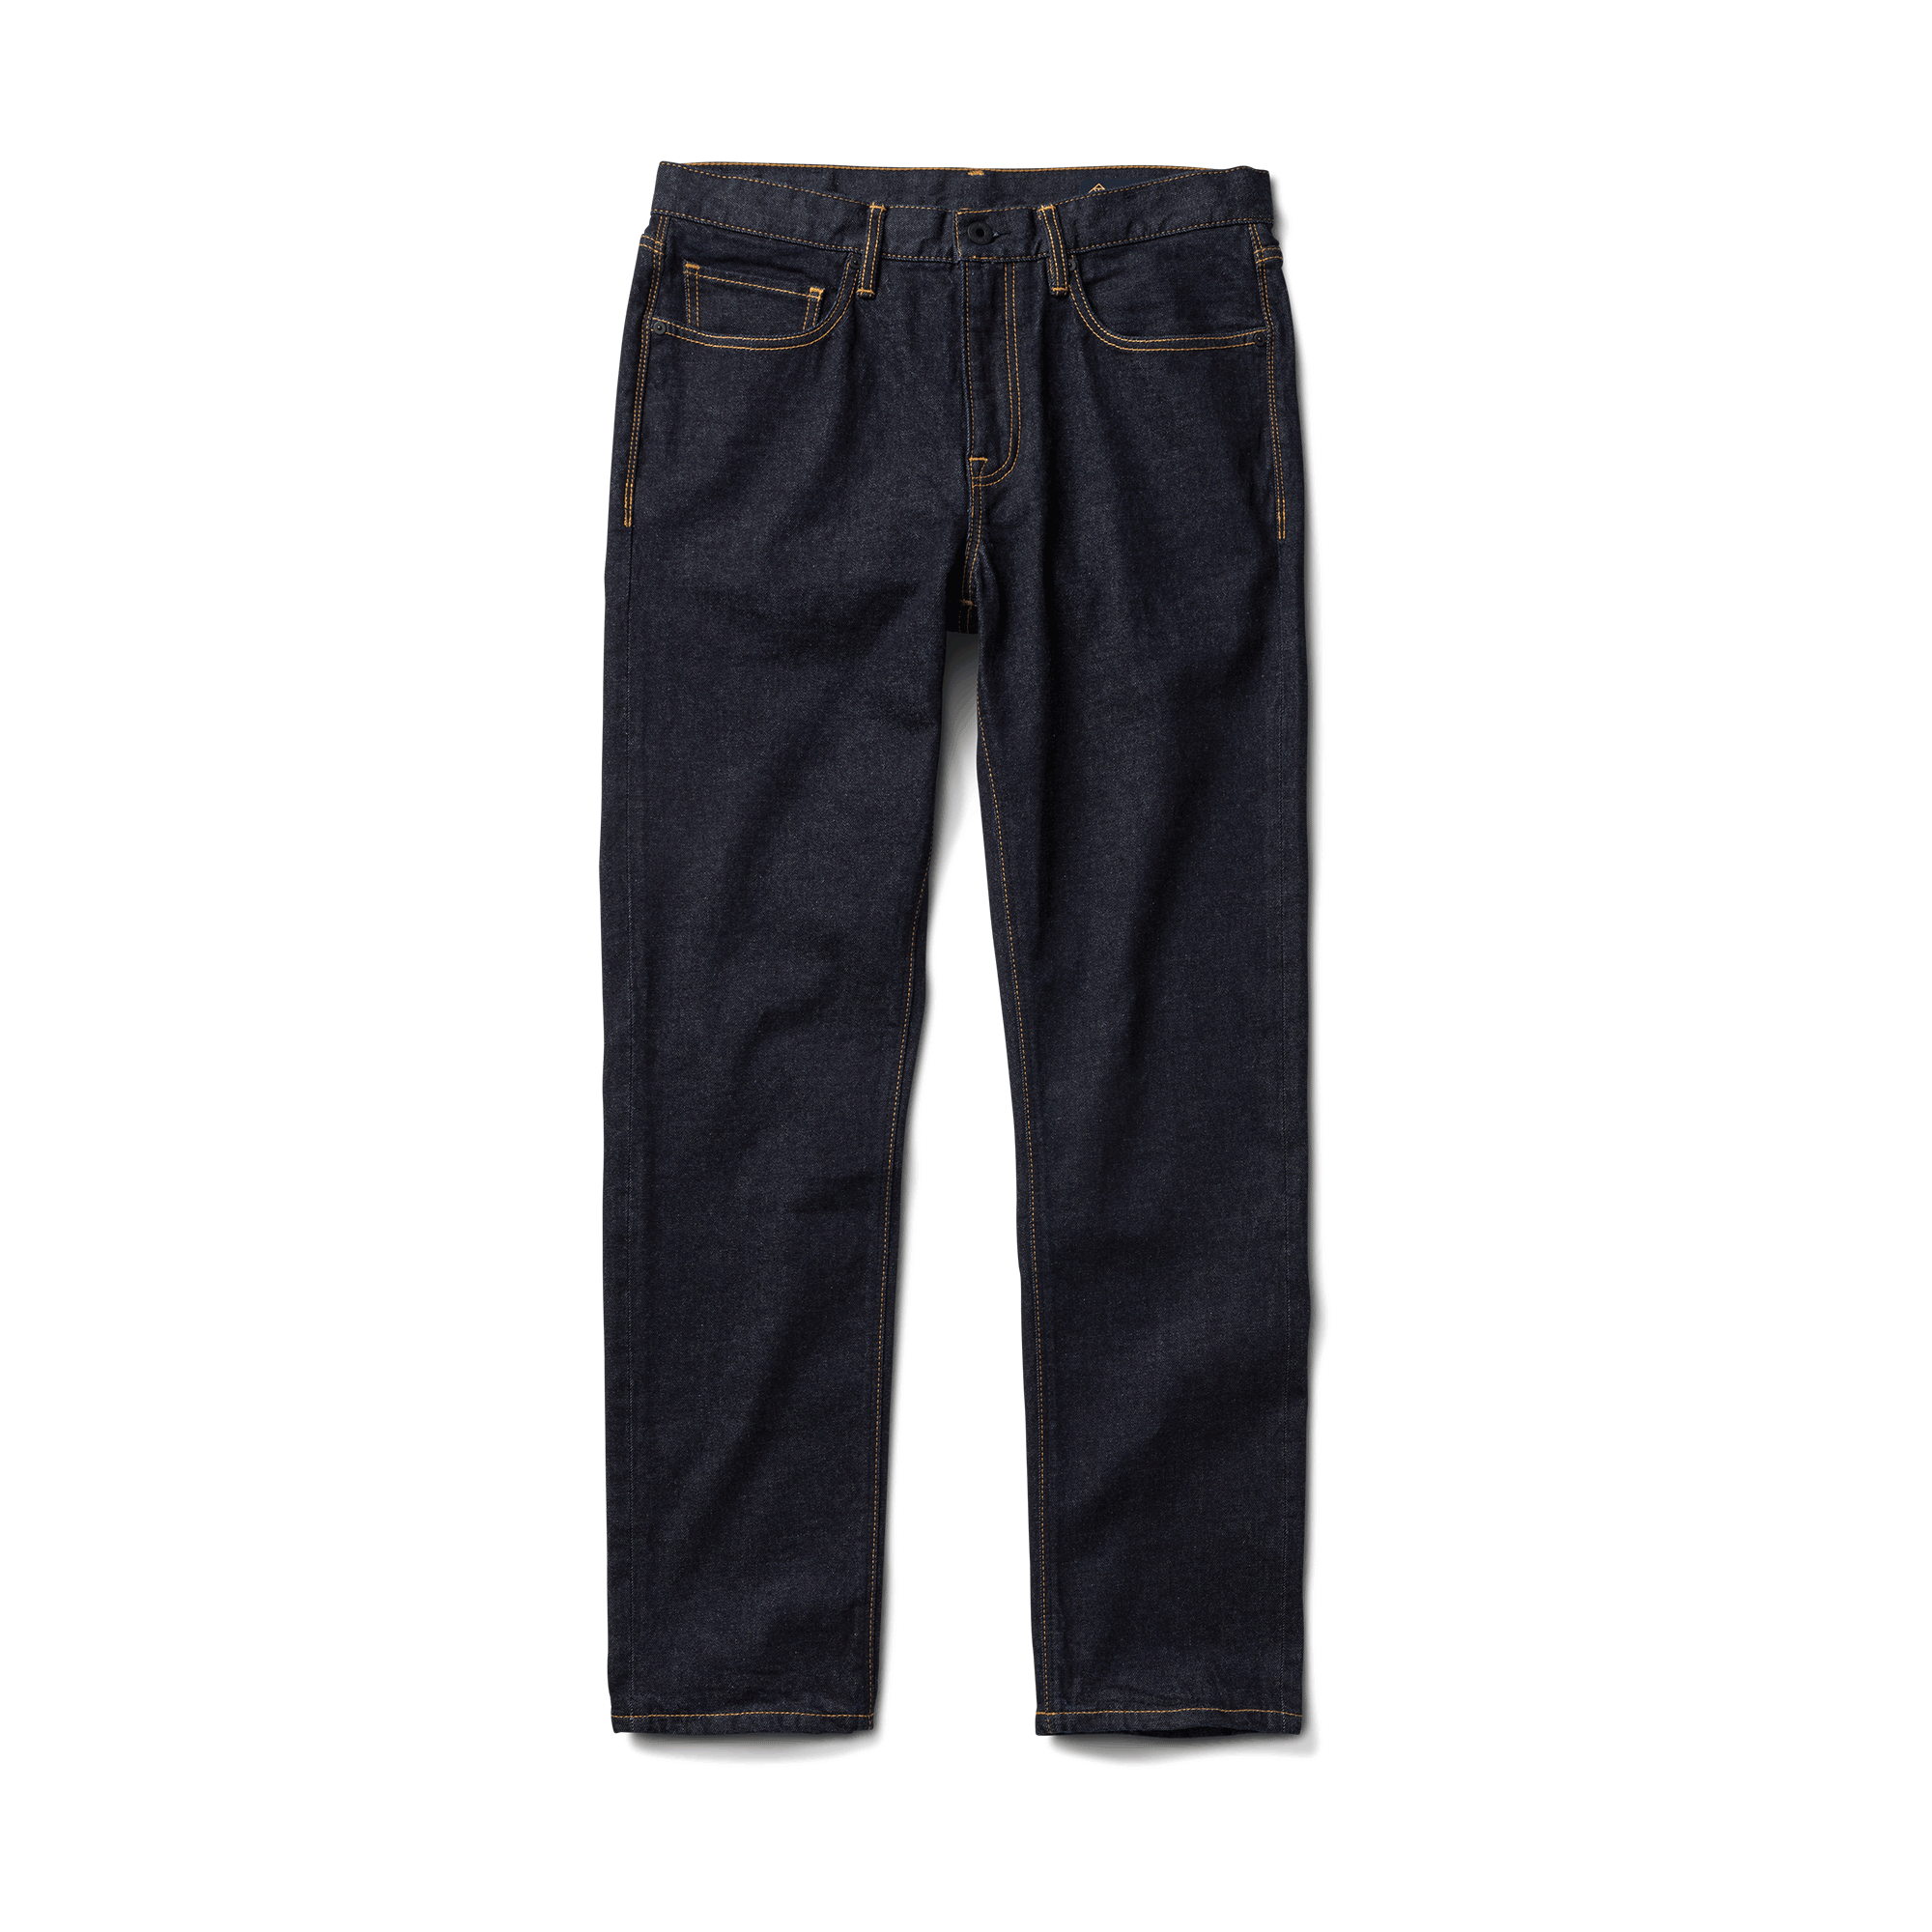 HWY 128 12.5oz Straight Fit Kaihara Denim Jeans - Raw – Roark